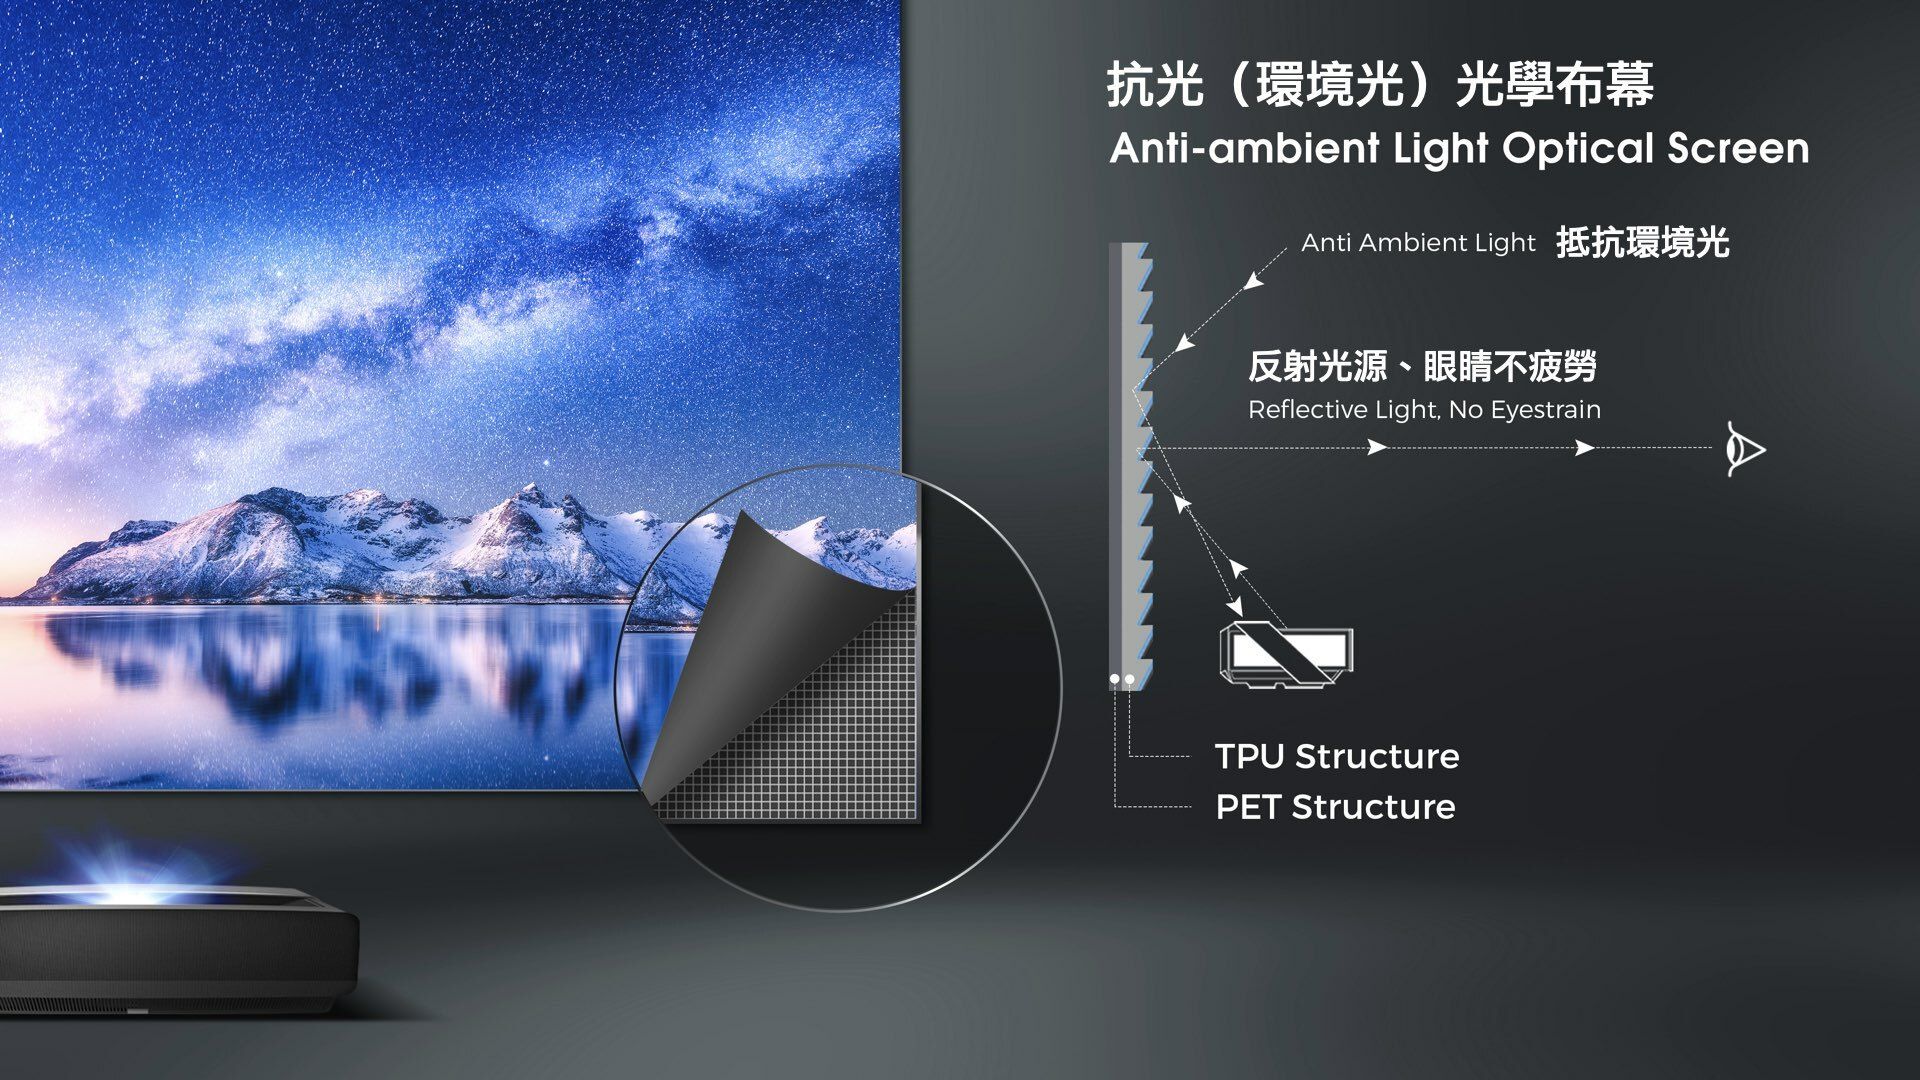 抗光(環境光)光學布幕Anti-ambient Light Optical ScreenAnti Ambient Light 抵抗環境光反射光源、眼睛不疲勞Reflective Light, No EyestrainTPU StructurePET Structure